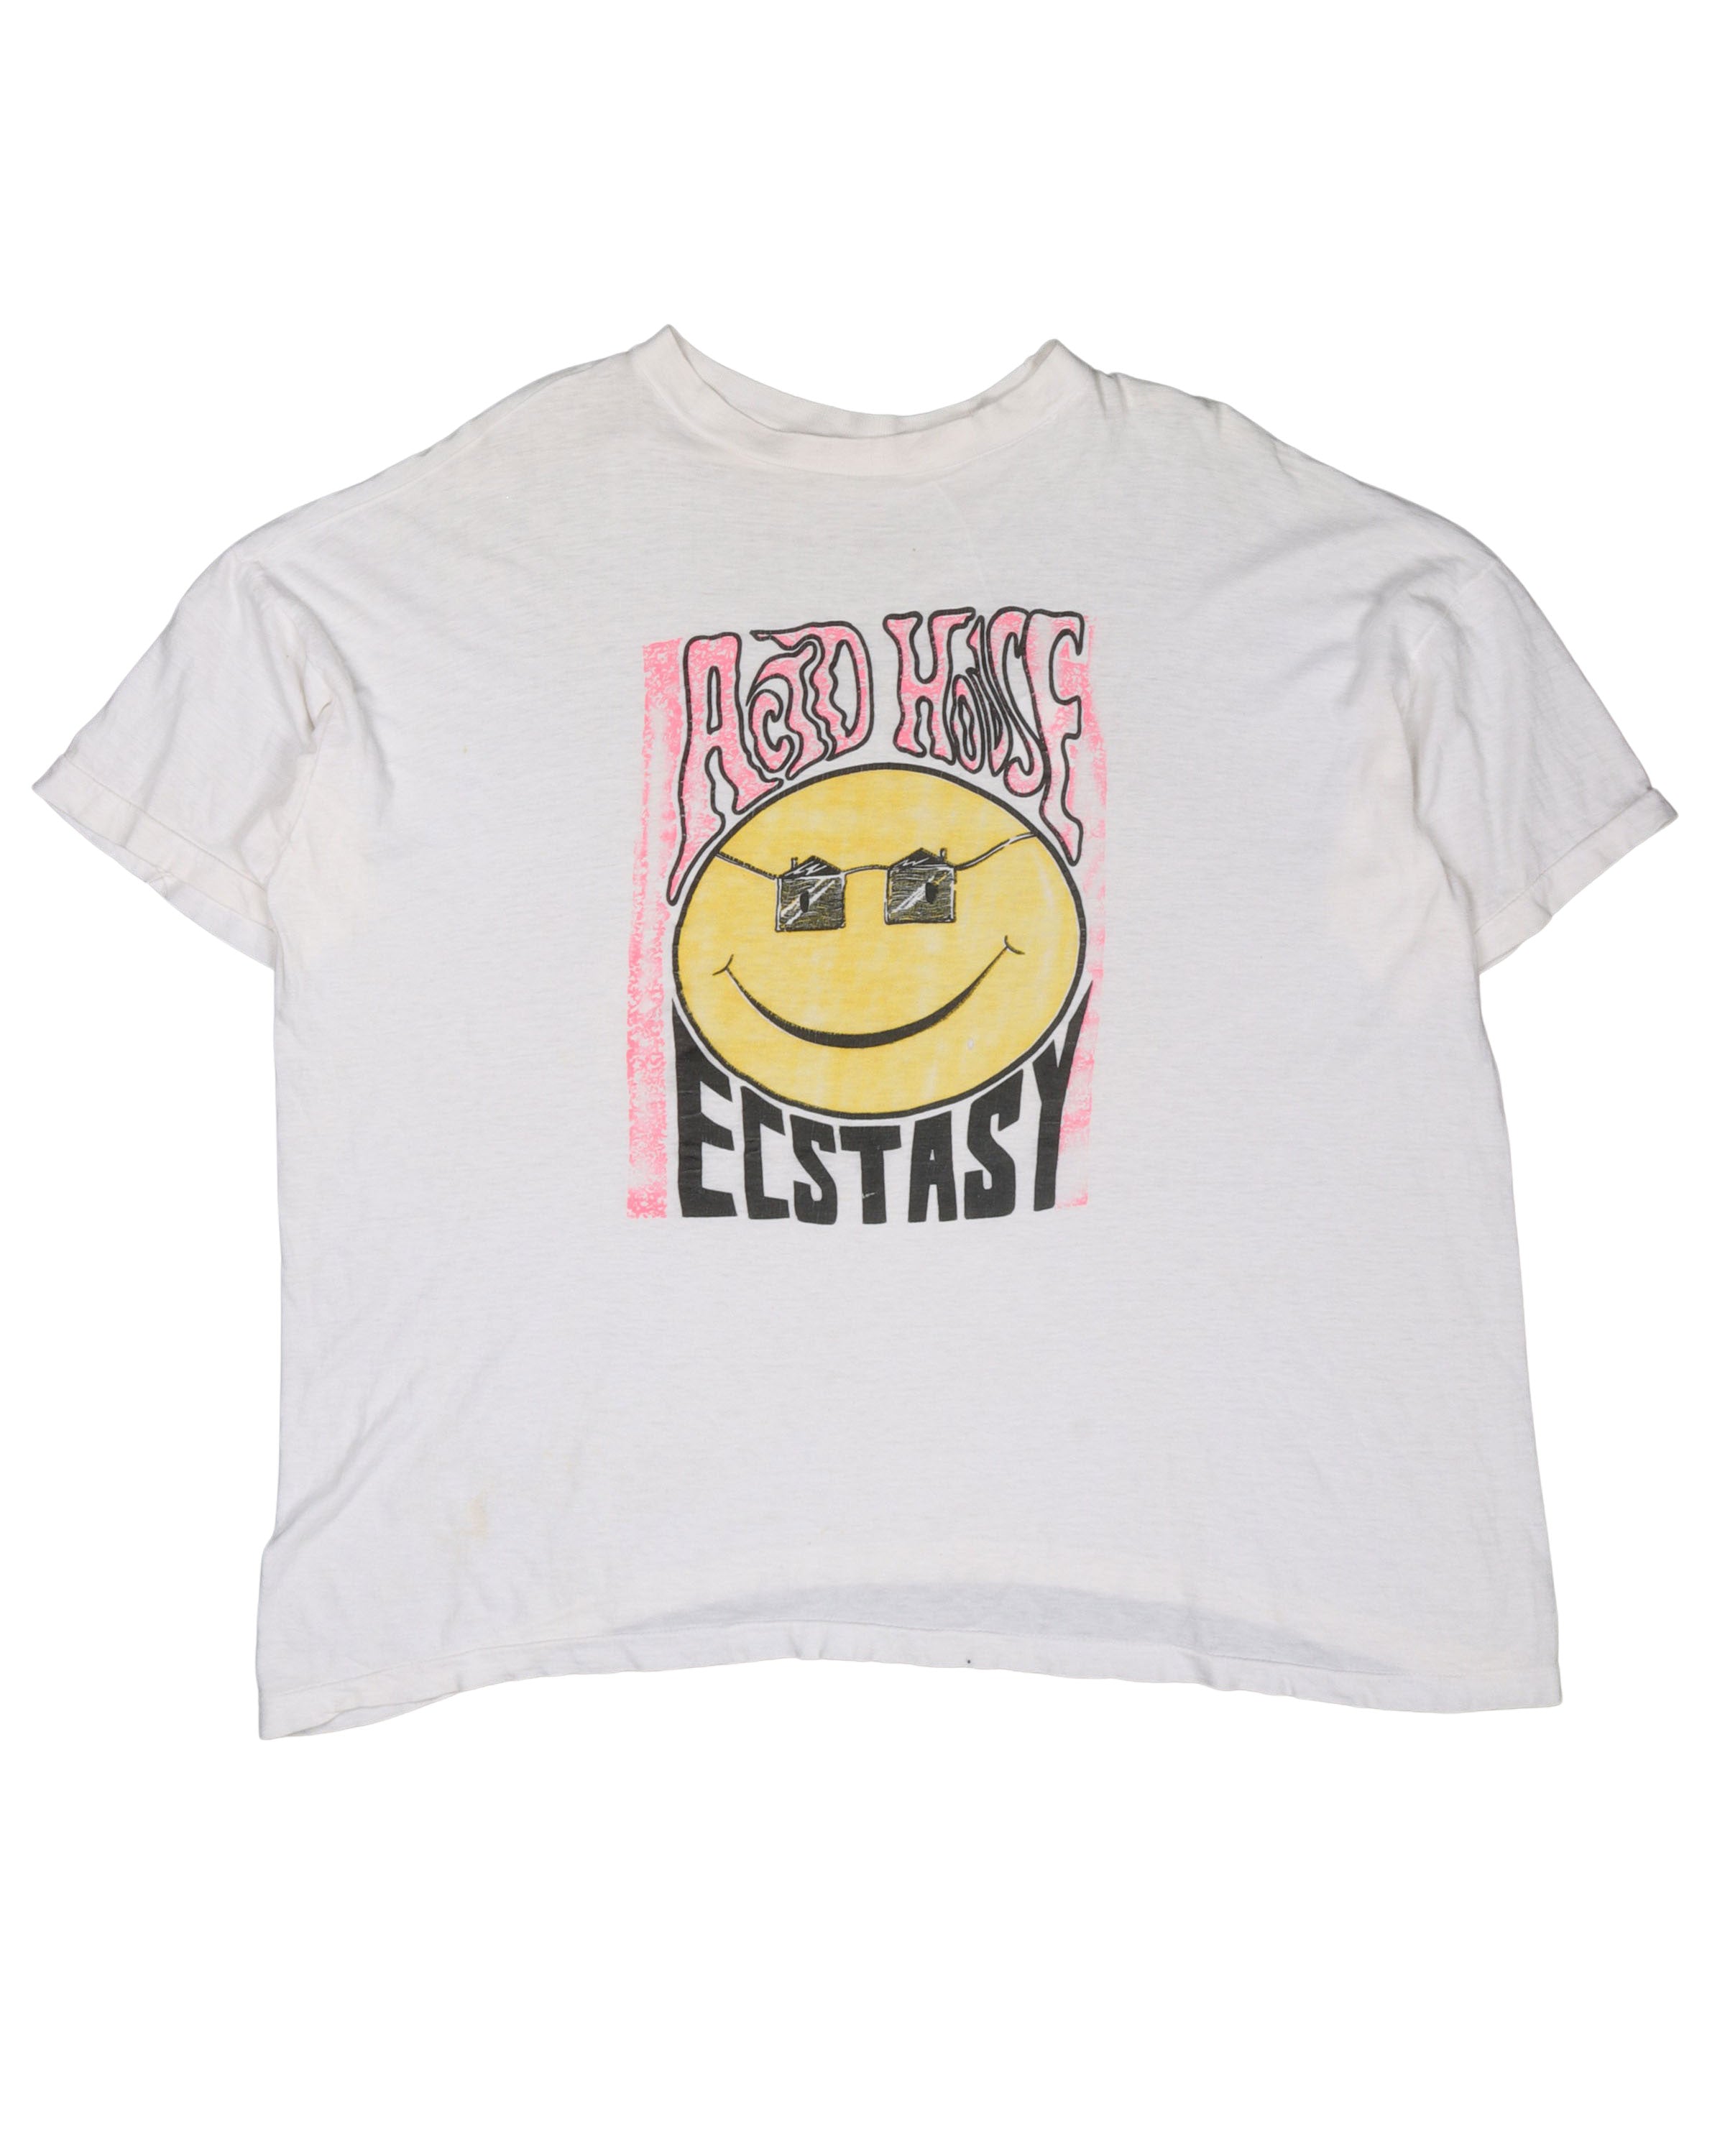 Acid House Ecstasy T-Shirt